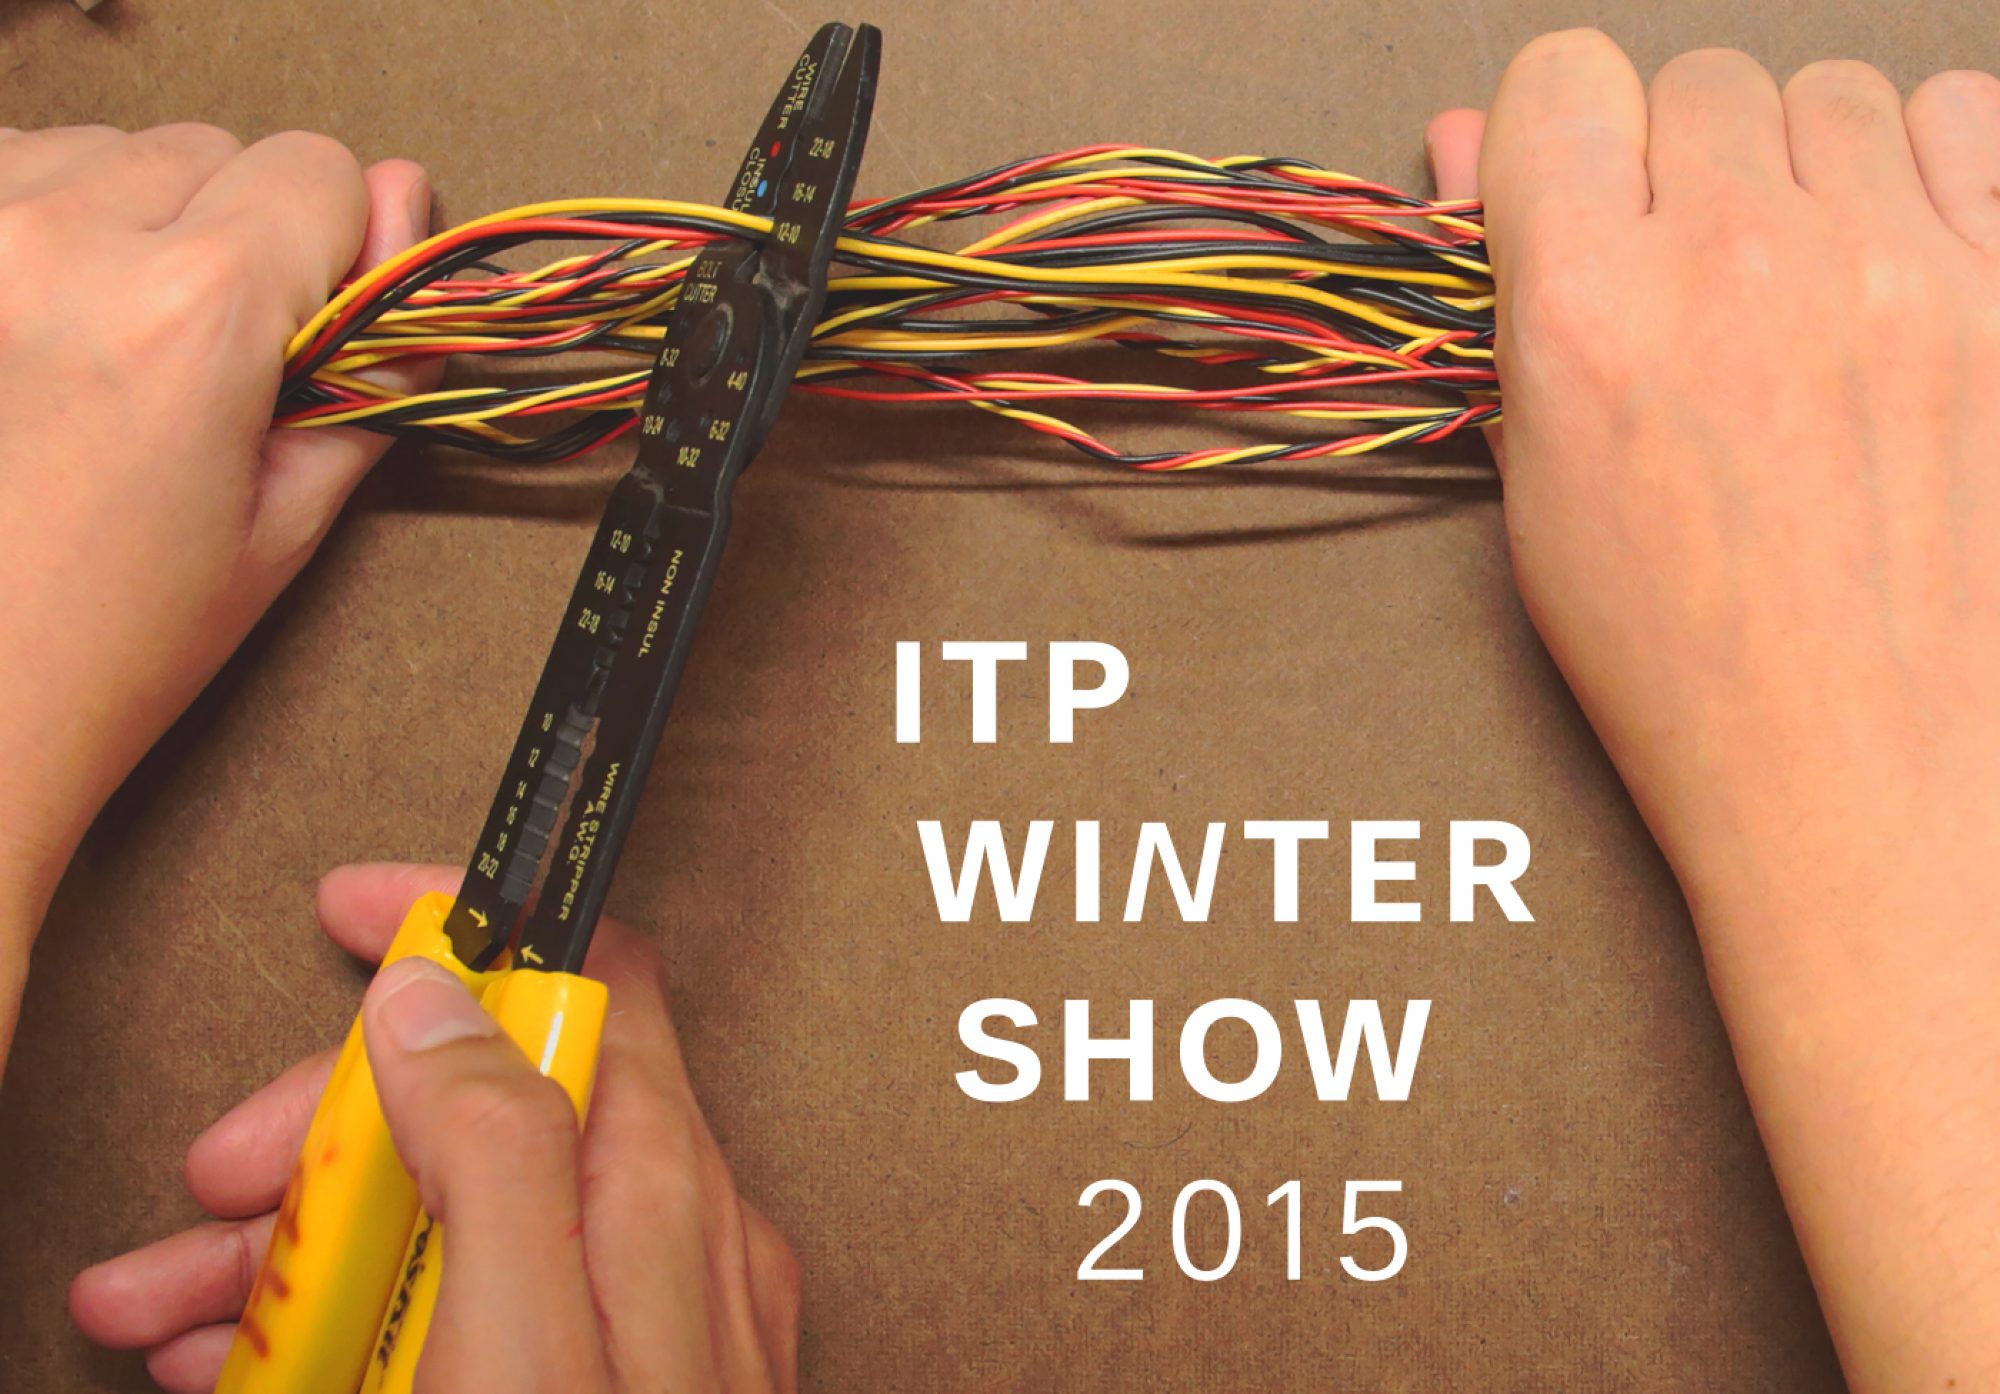 ITP Winter Show 2015